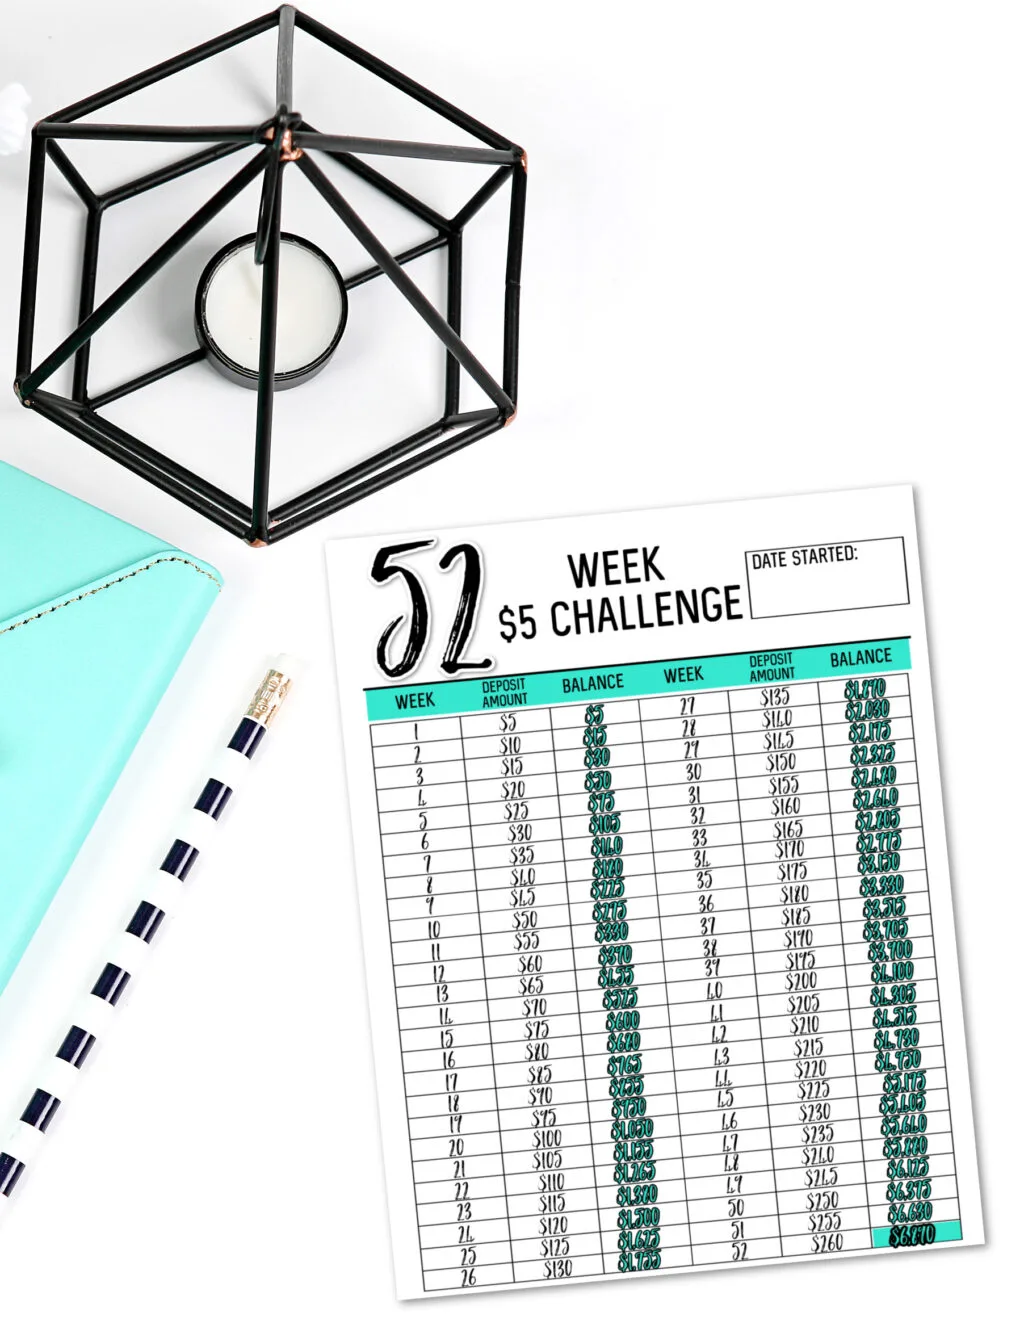 52 week $5 challenge